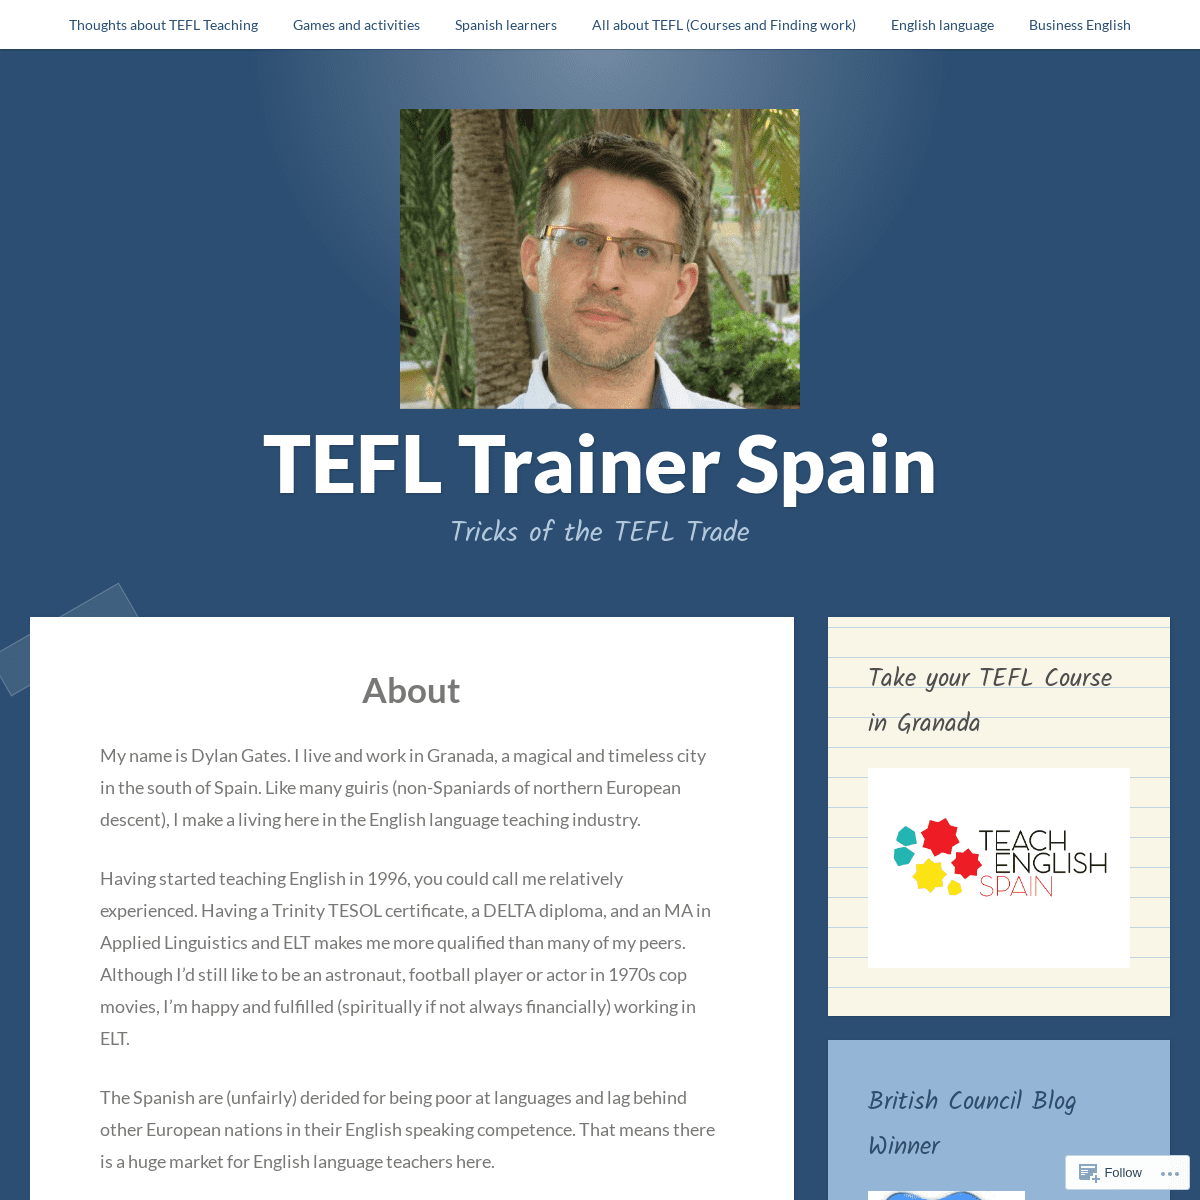 TEFL Trainer Spain – Tricks of the TEFL Trade